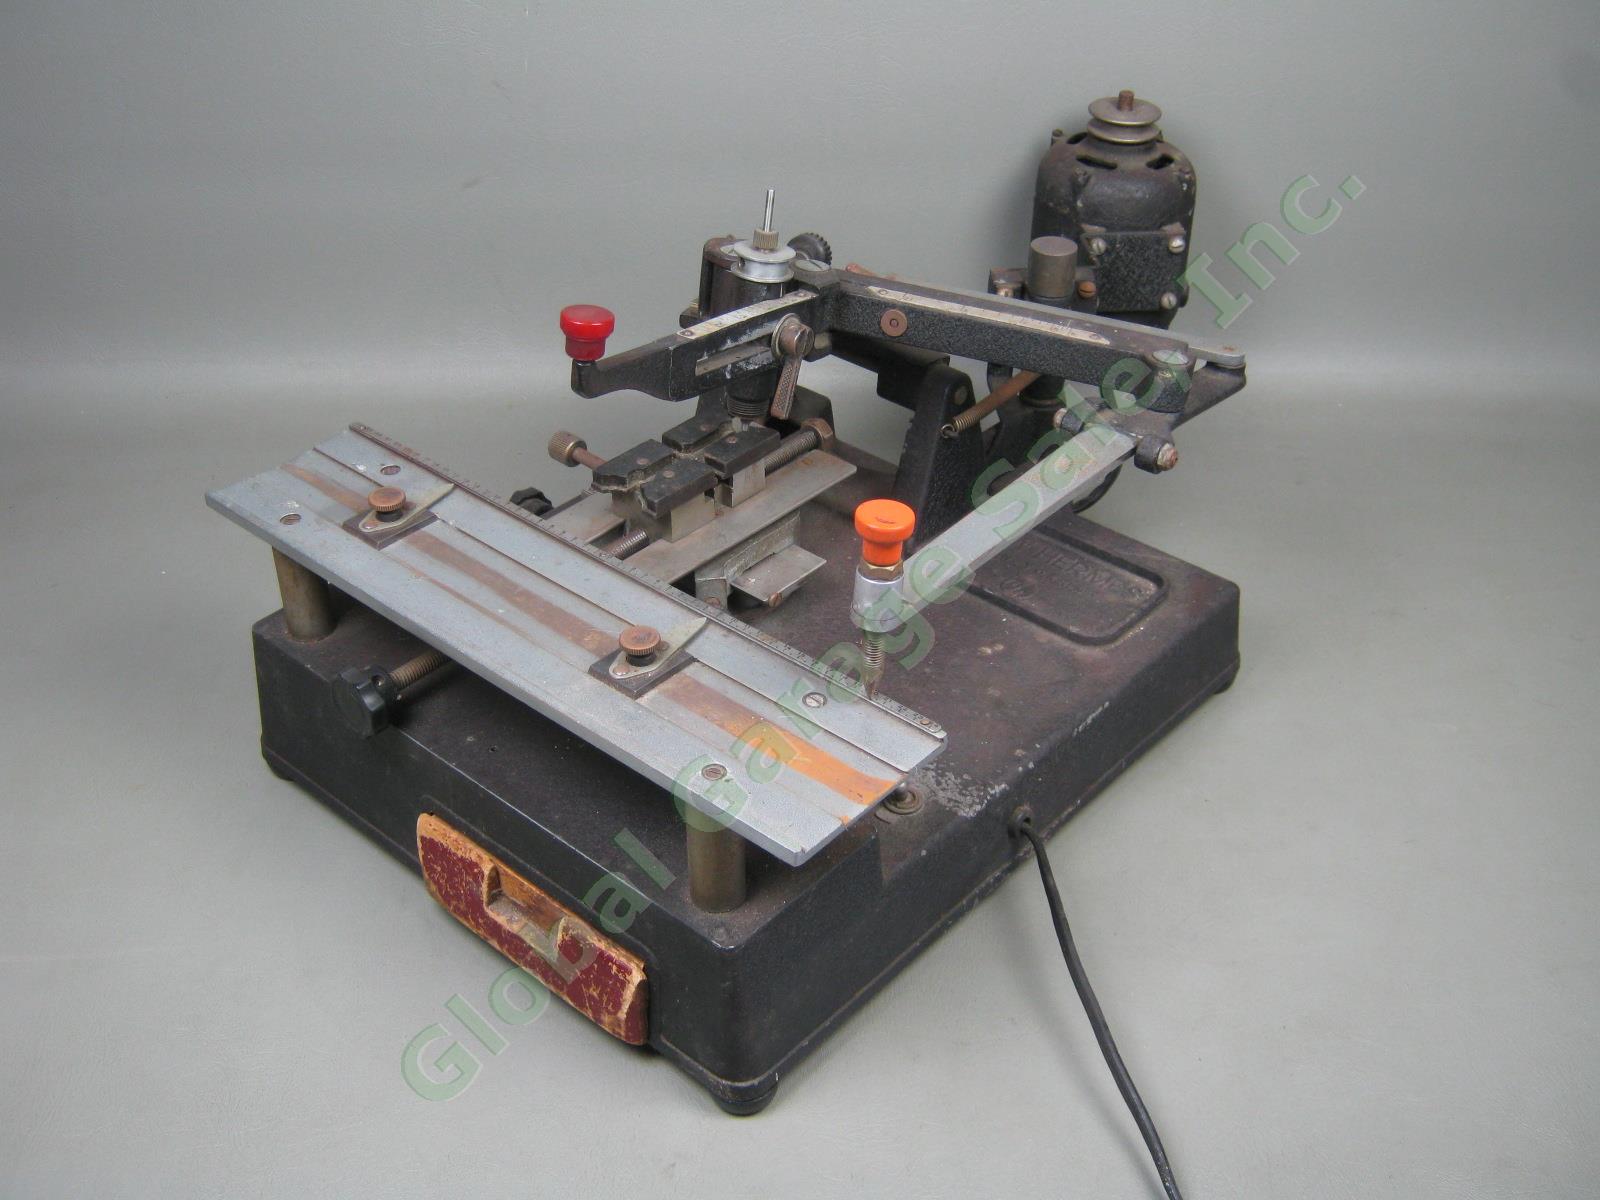 Vtg Antique New Hermes Portable IND EM Engraving Machine + Tools Accessories Lot 4